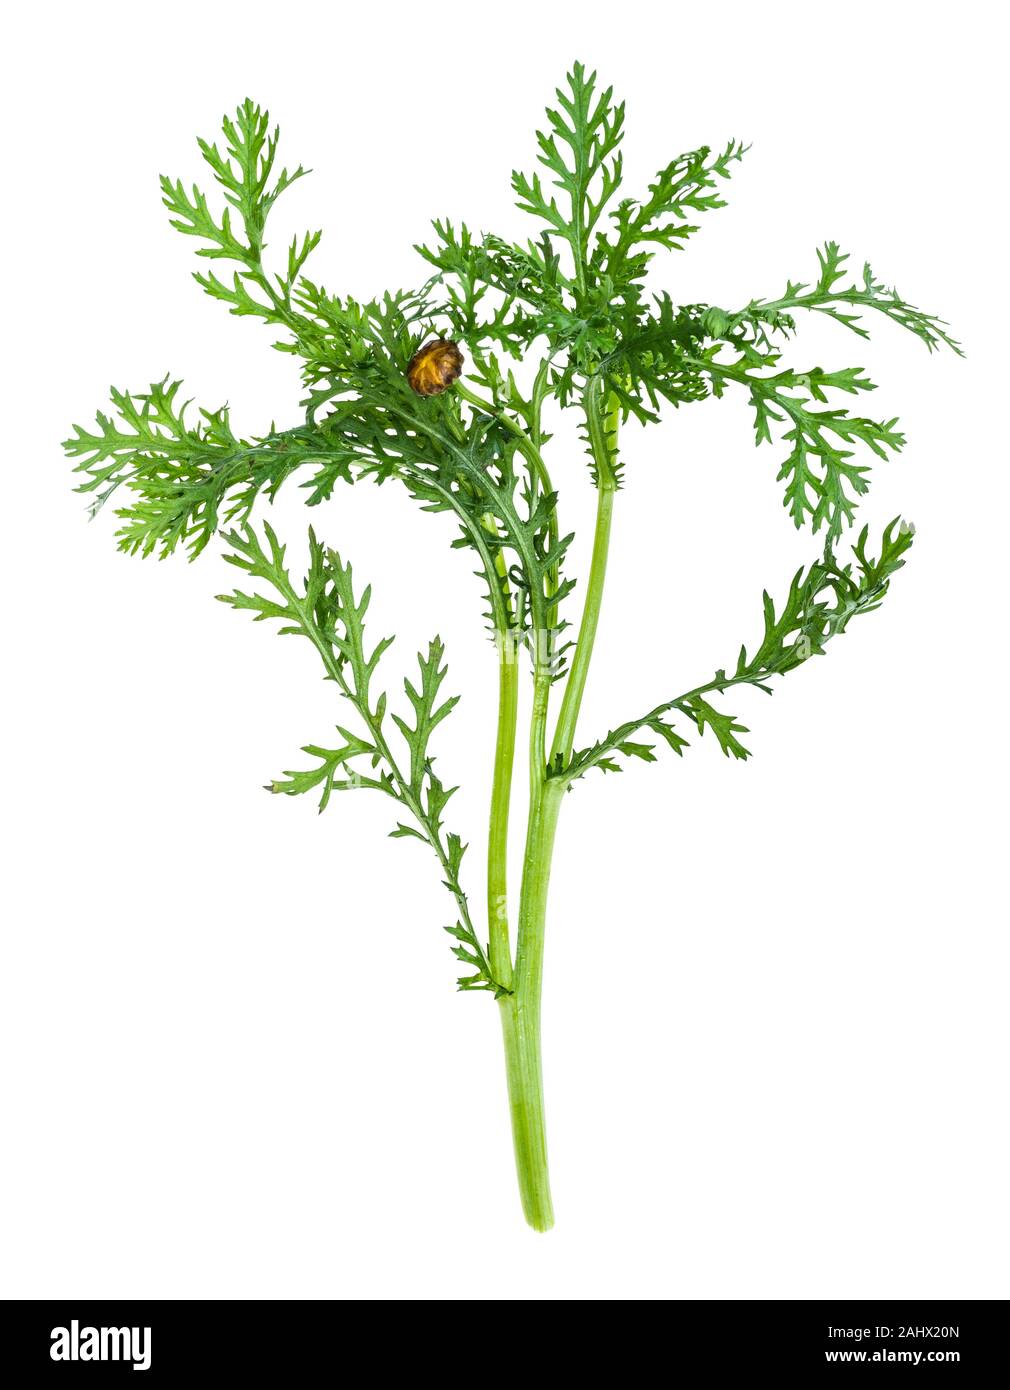 green twig of fresh edible chrysanthemum (glebionis coronaria) plant cutout on white background Stock Photo